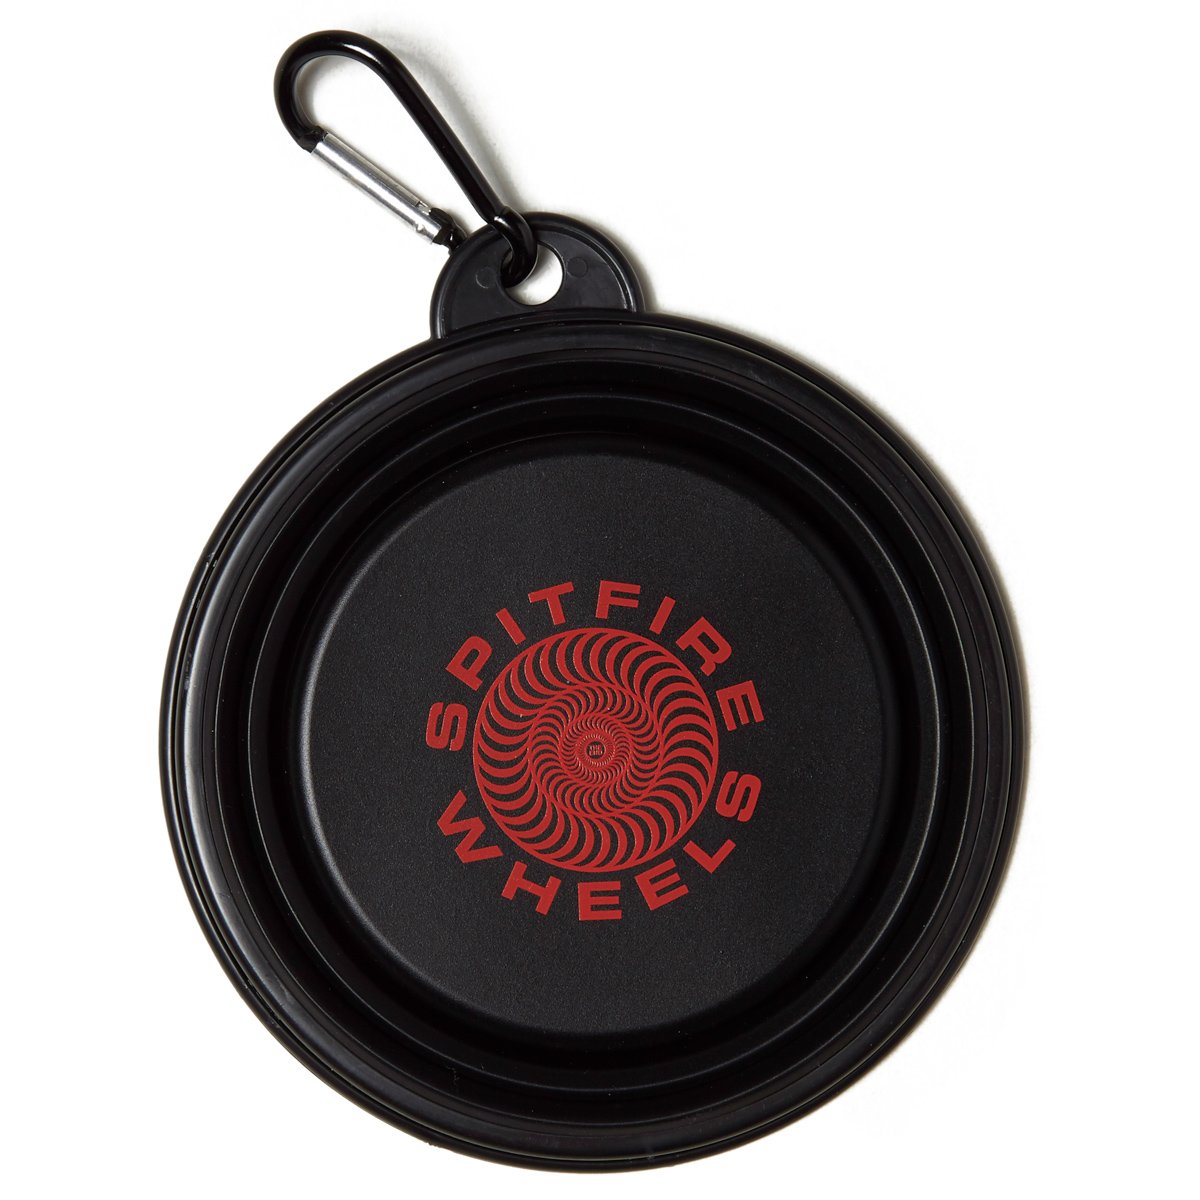 Spitfire Classic 87' Swirl Pet Bowl - Black/Red image 1